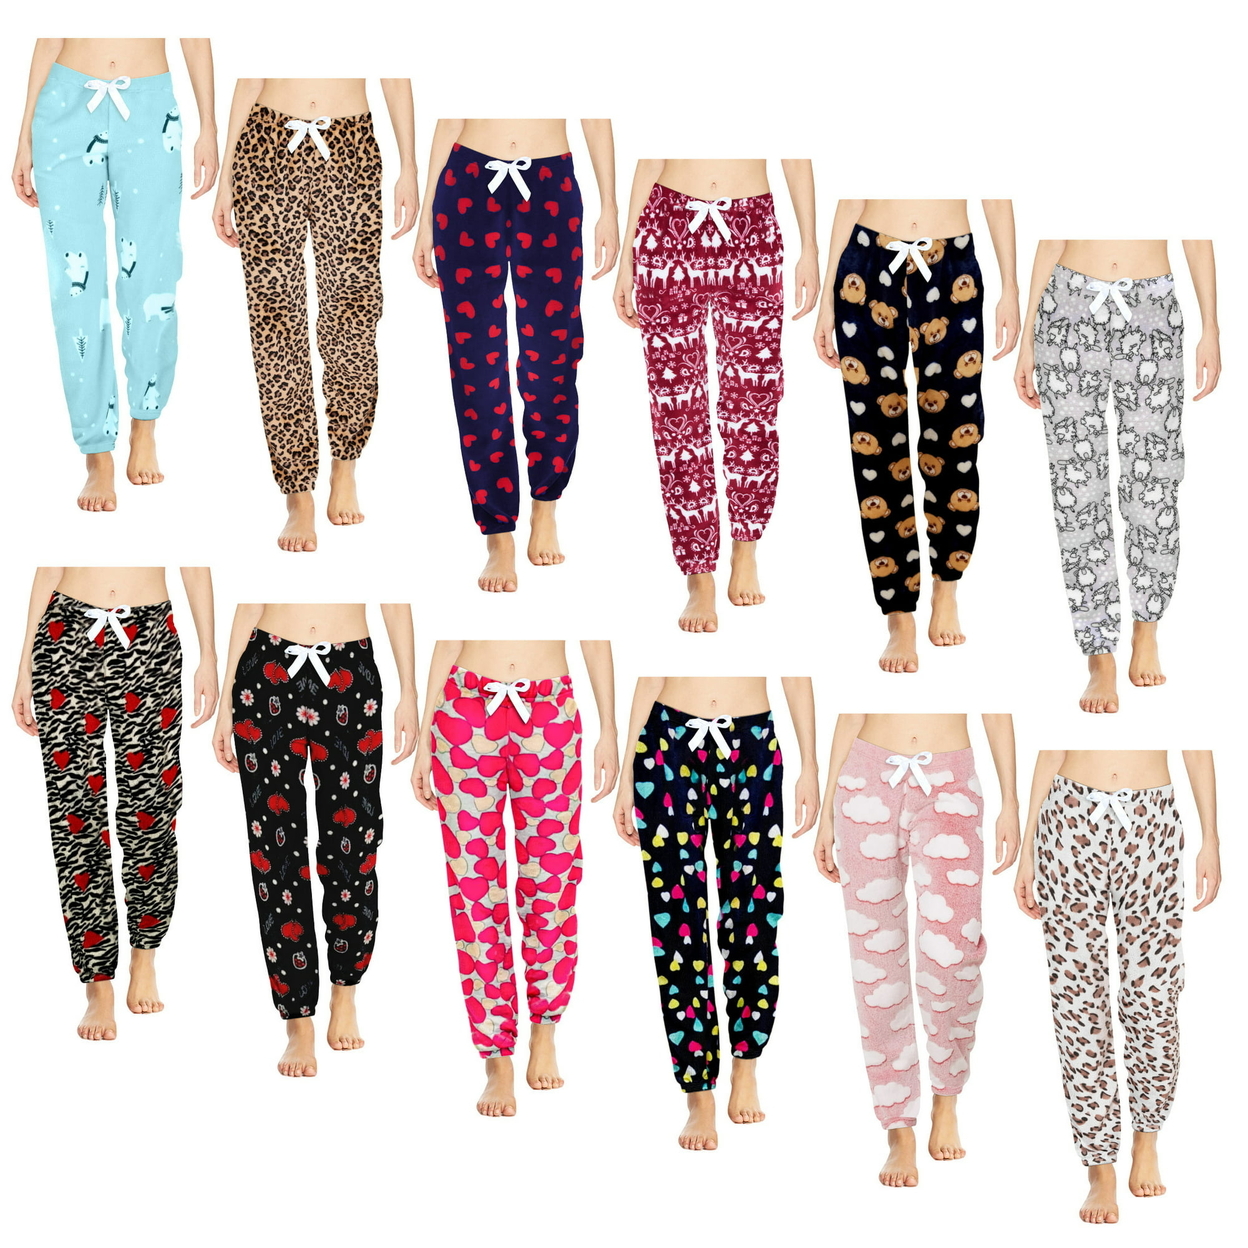 4-Pack: Women's Printed Ultra-Soft Comfy Stretch Micro-Fleece Pajama Lounge Pants - X-large, Love